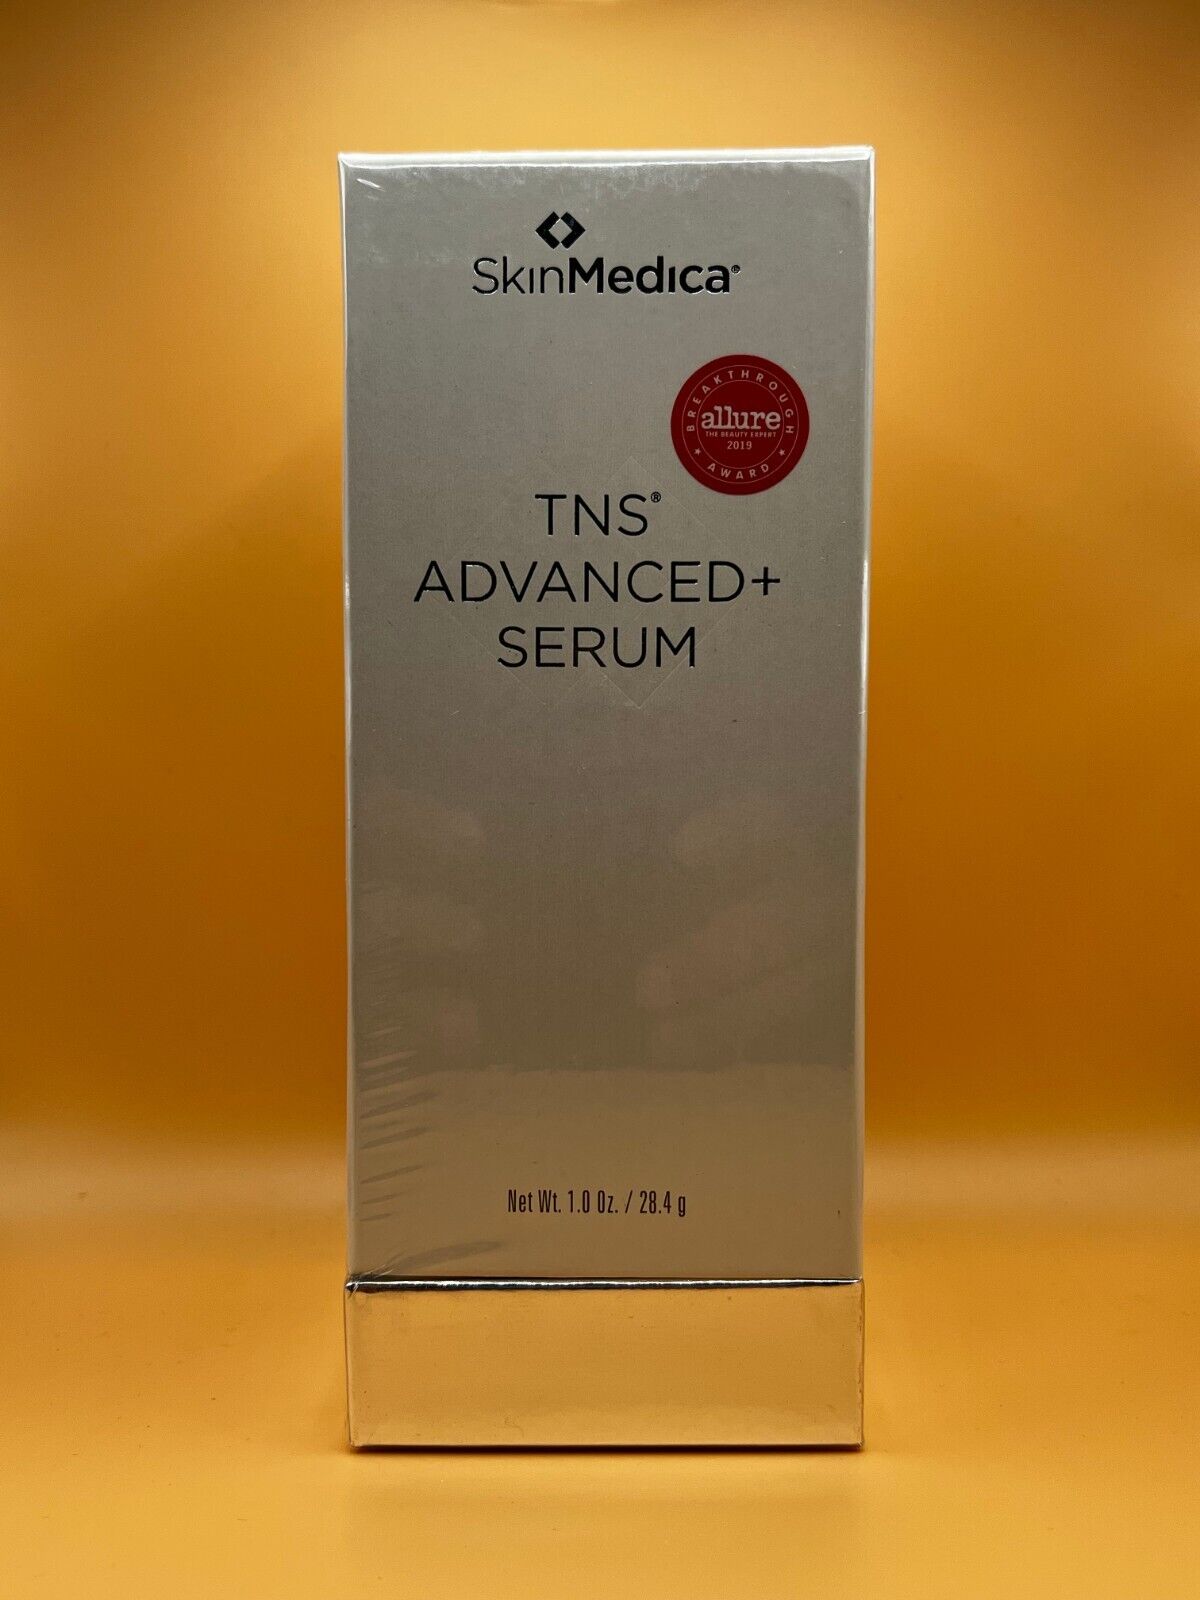 SkinMedica TNS Advanced+ Serum 1oz/28.4g Our Premium Facial 